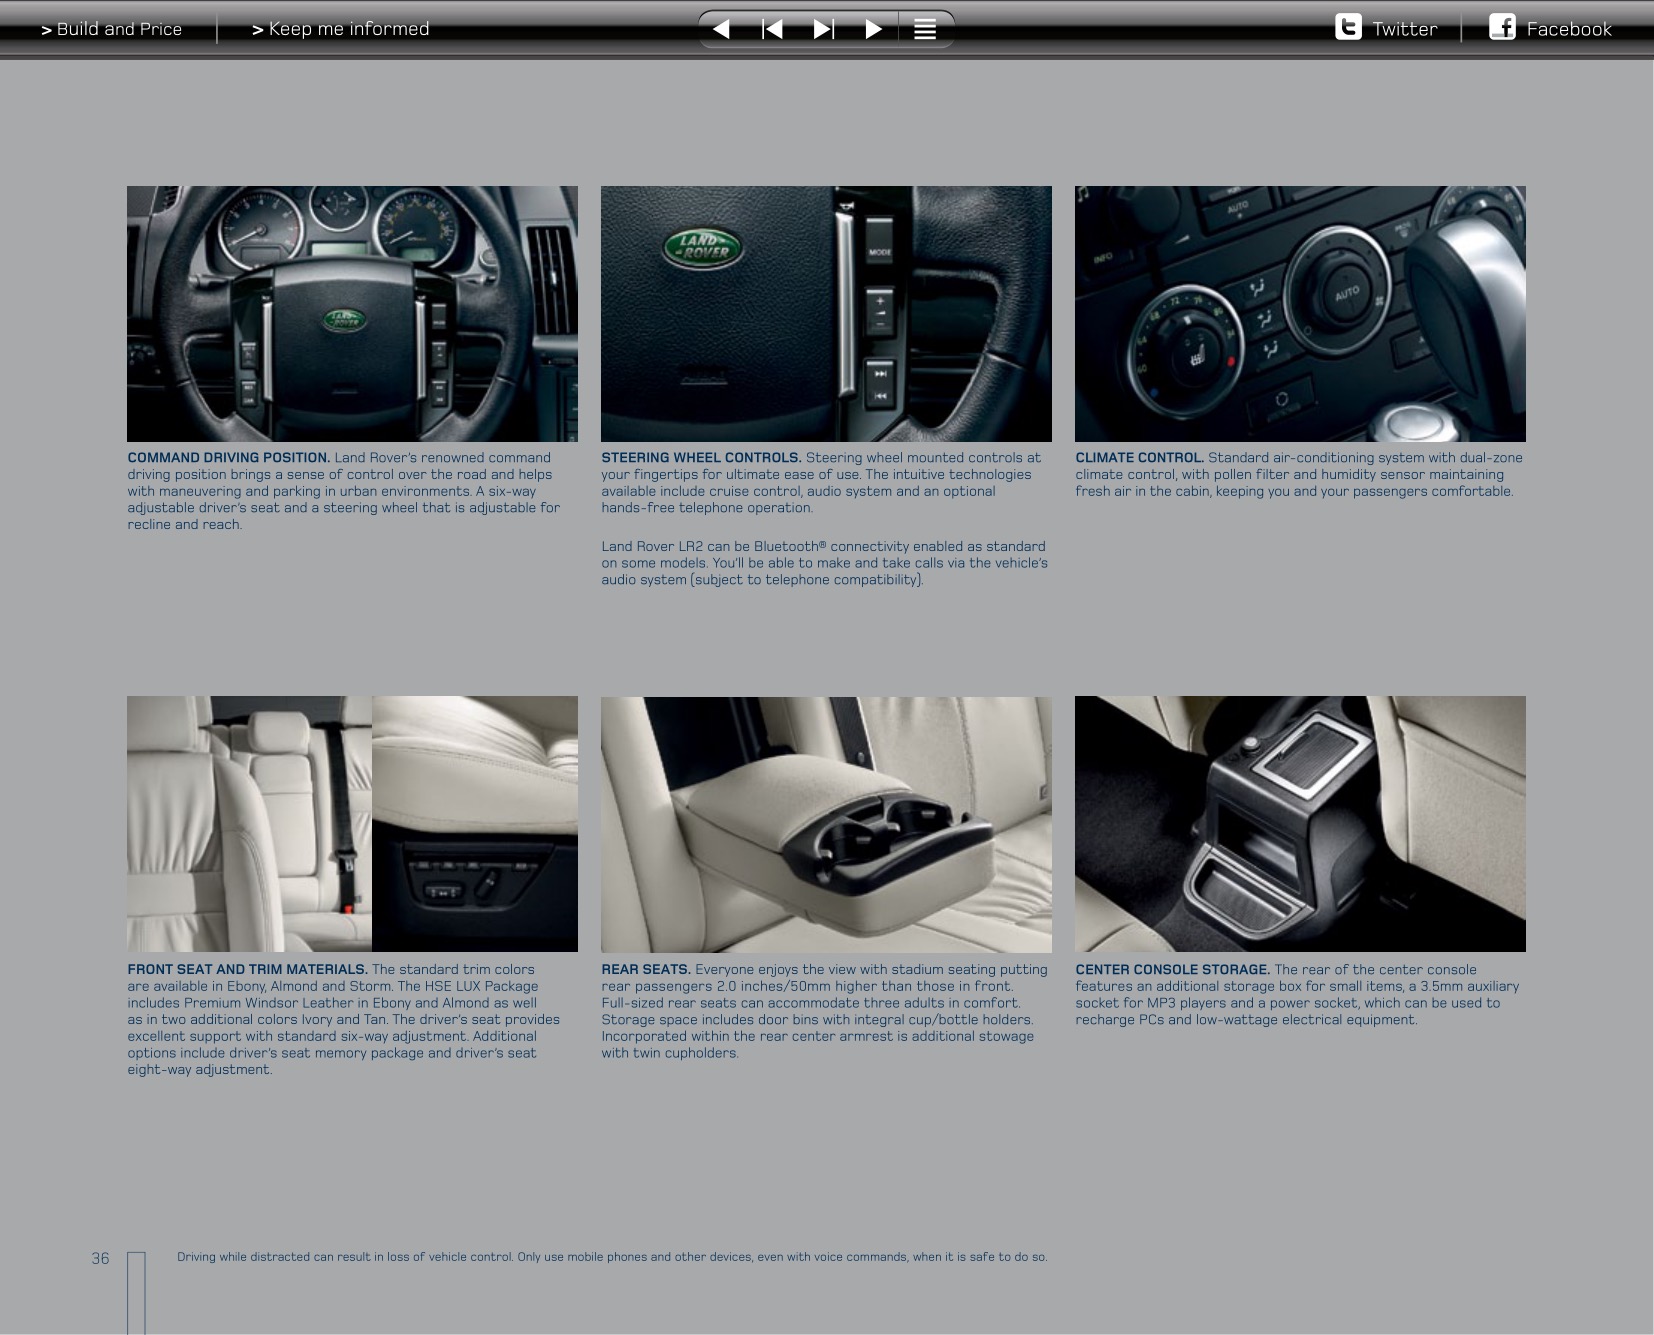 2012 Land Rover LR2 Brochure Page 24